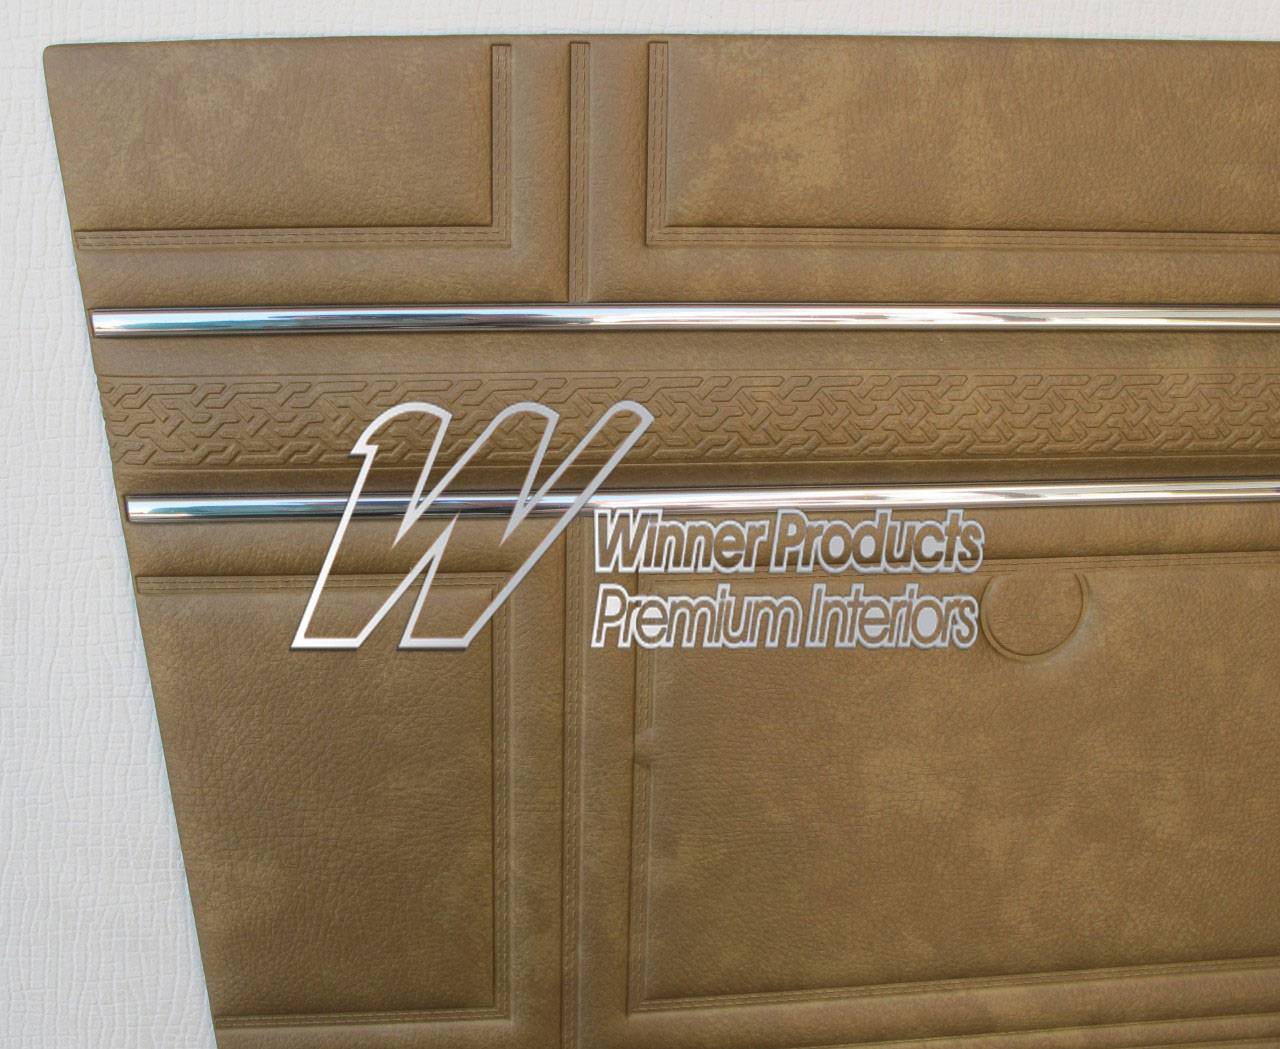 Holden Kingswood HT Kingswood Ute 11G Antique Gold & Castillion Weave Door Trims (Image 3 of 3)